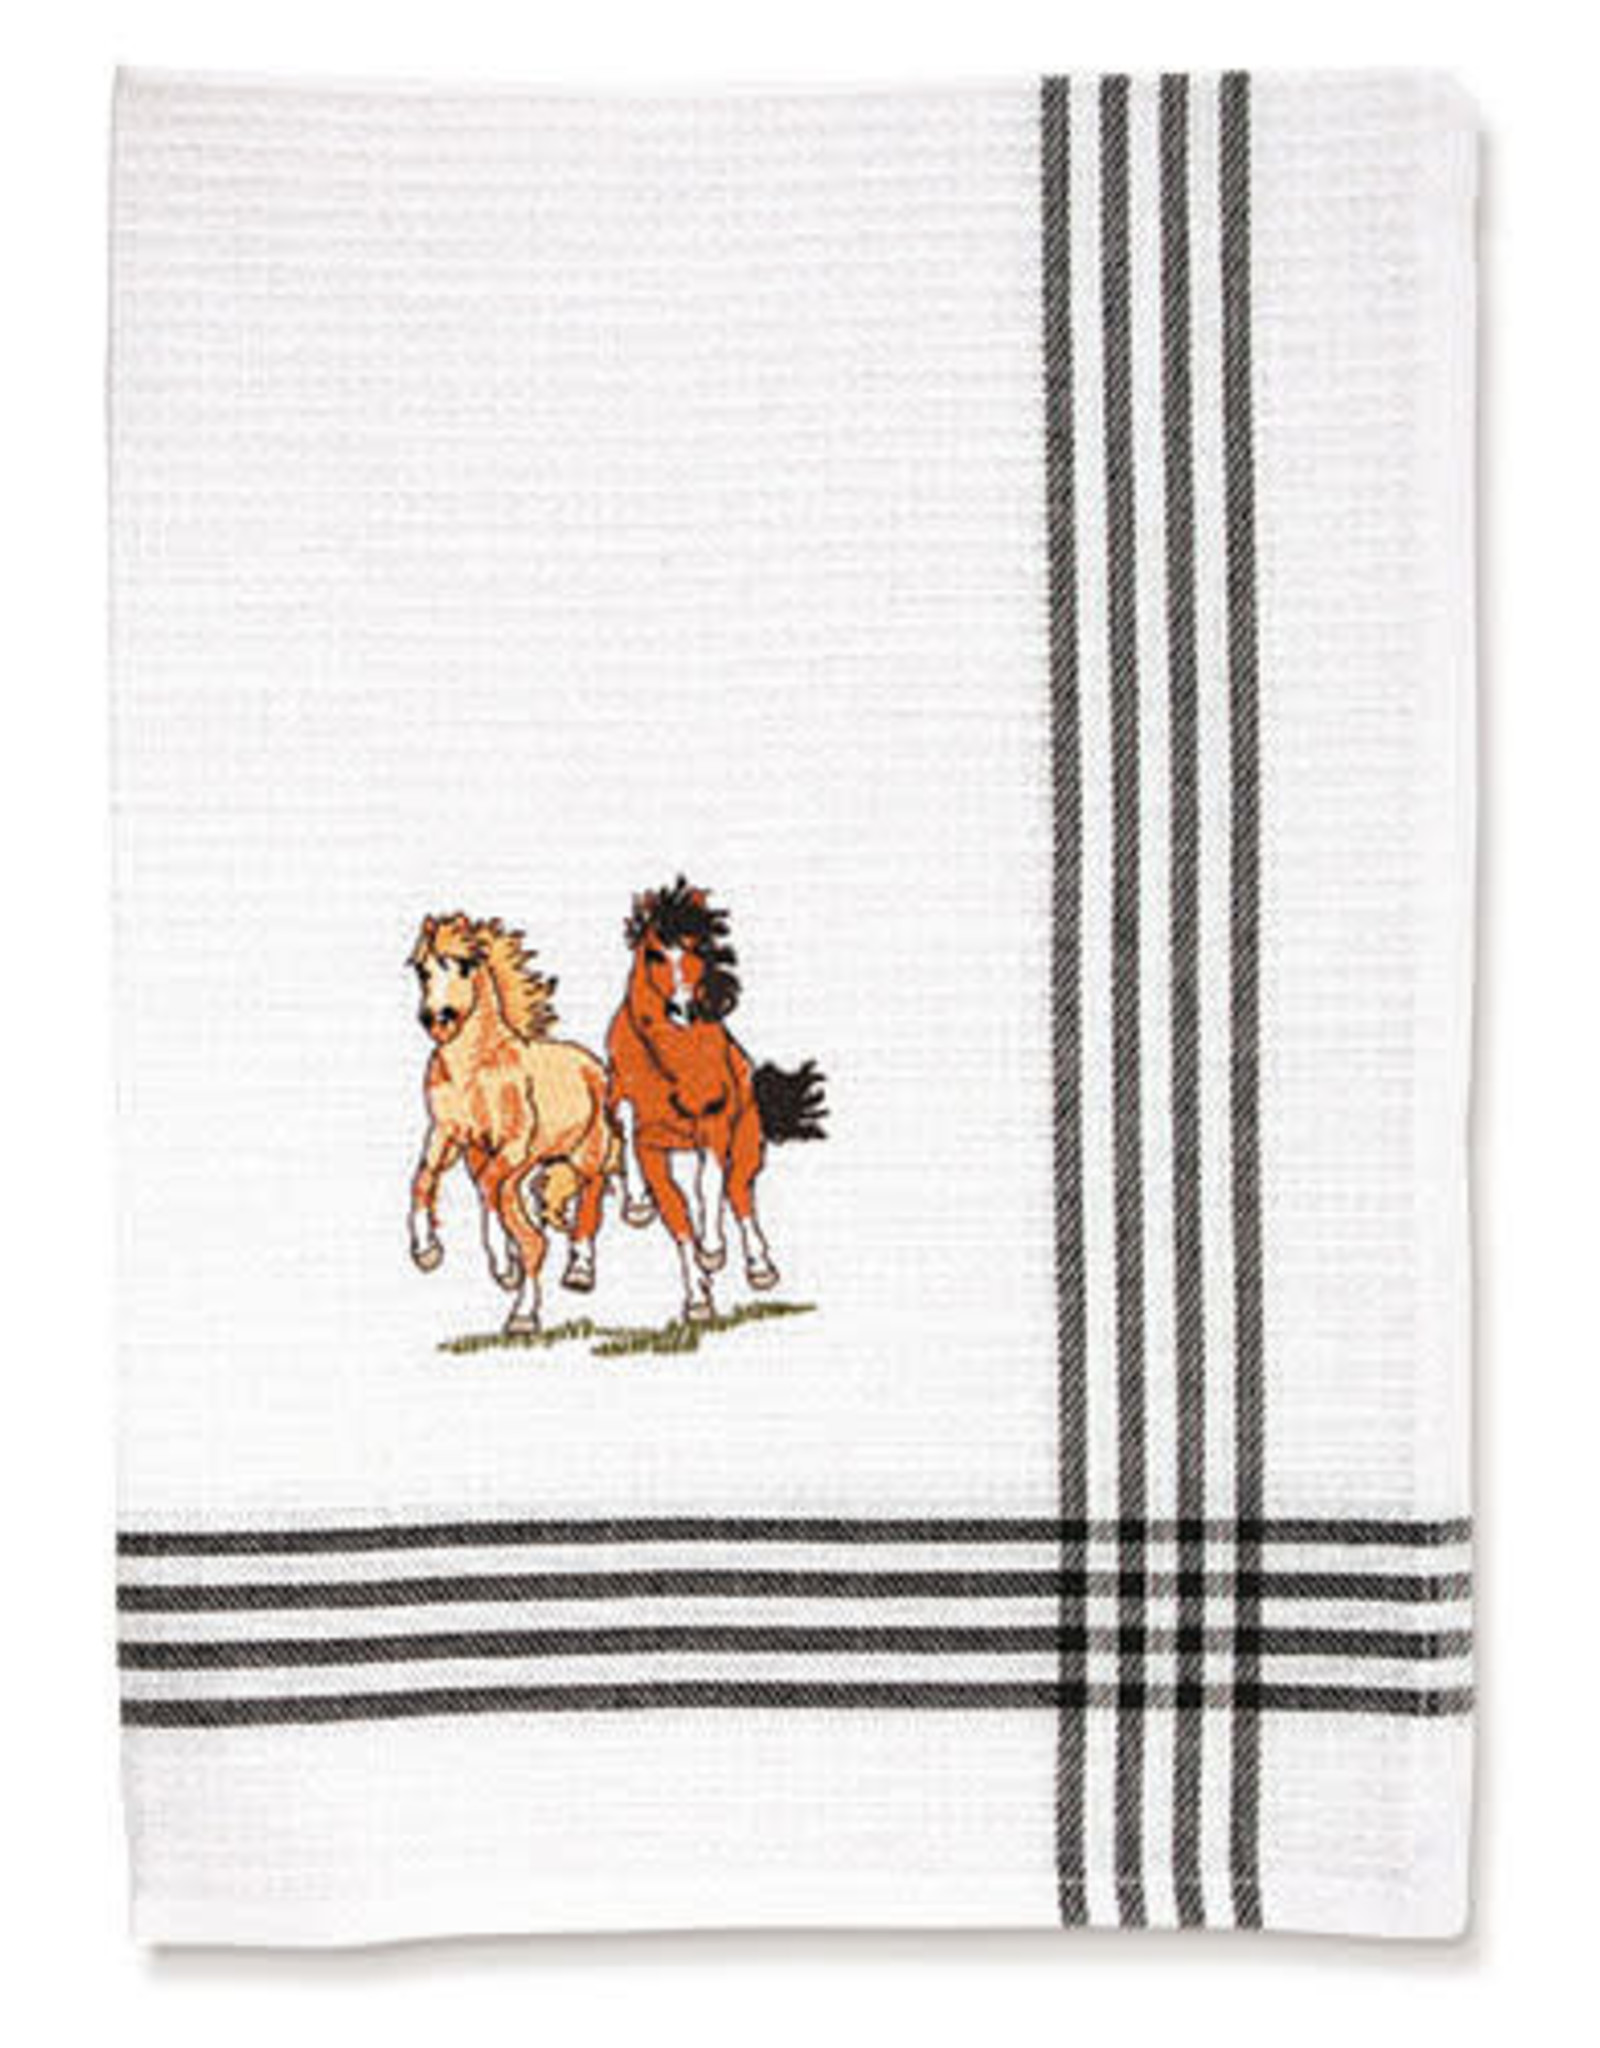 Tea towels 100% cotton embroidered asst. horse design